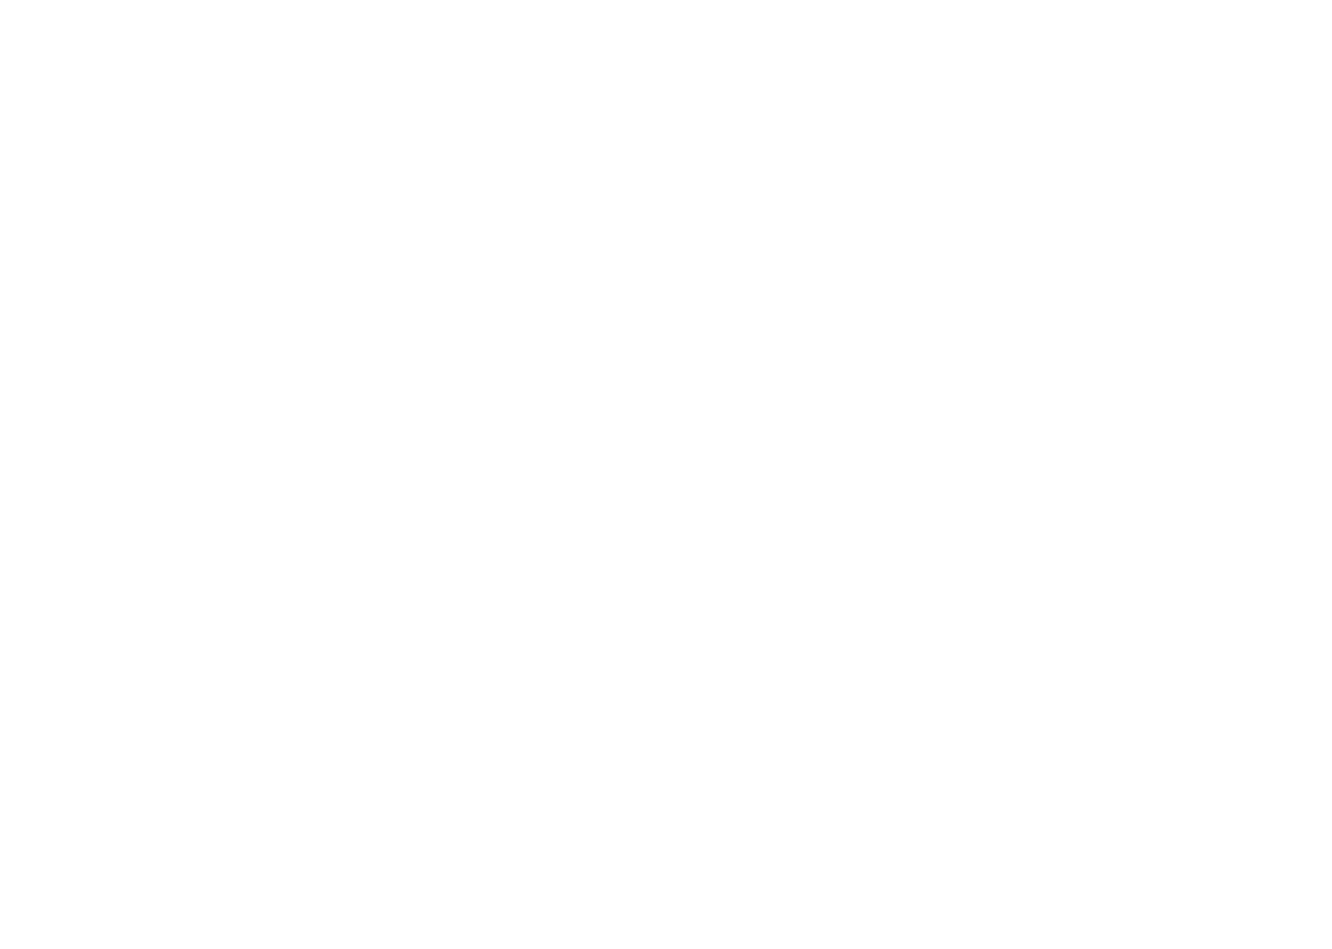 Захват пирата Чёрная Борода, 1718, Жан Леон Жером Феррис